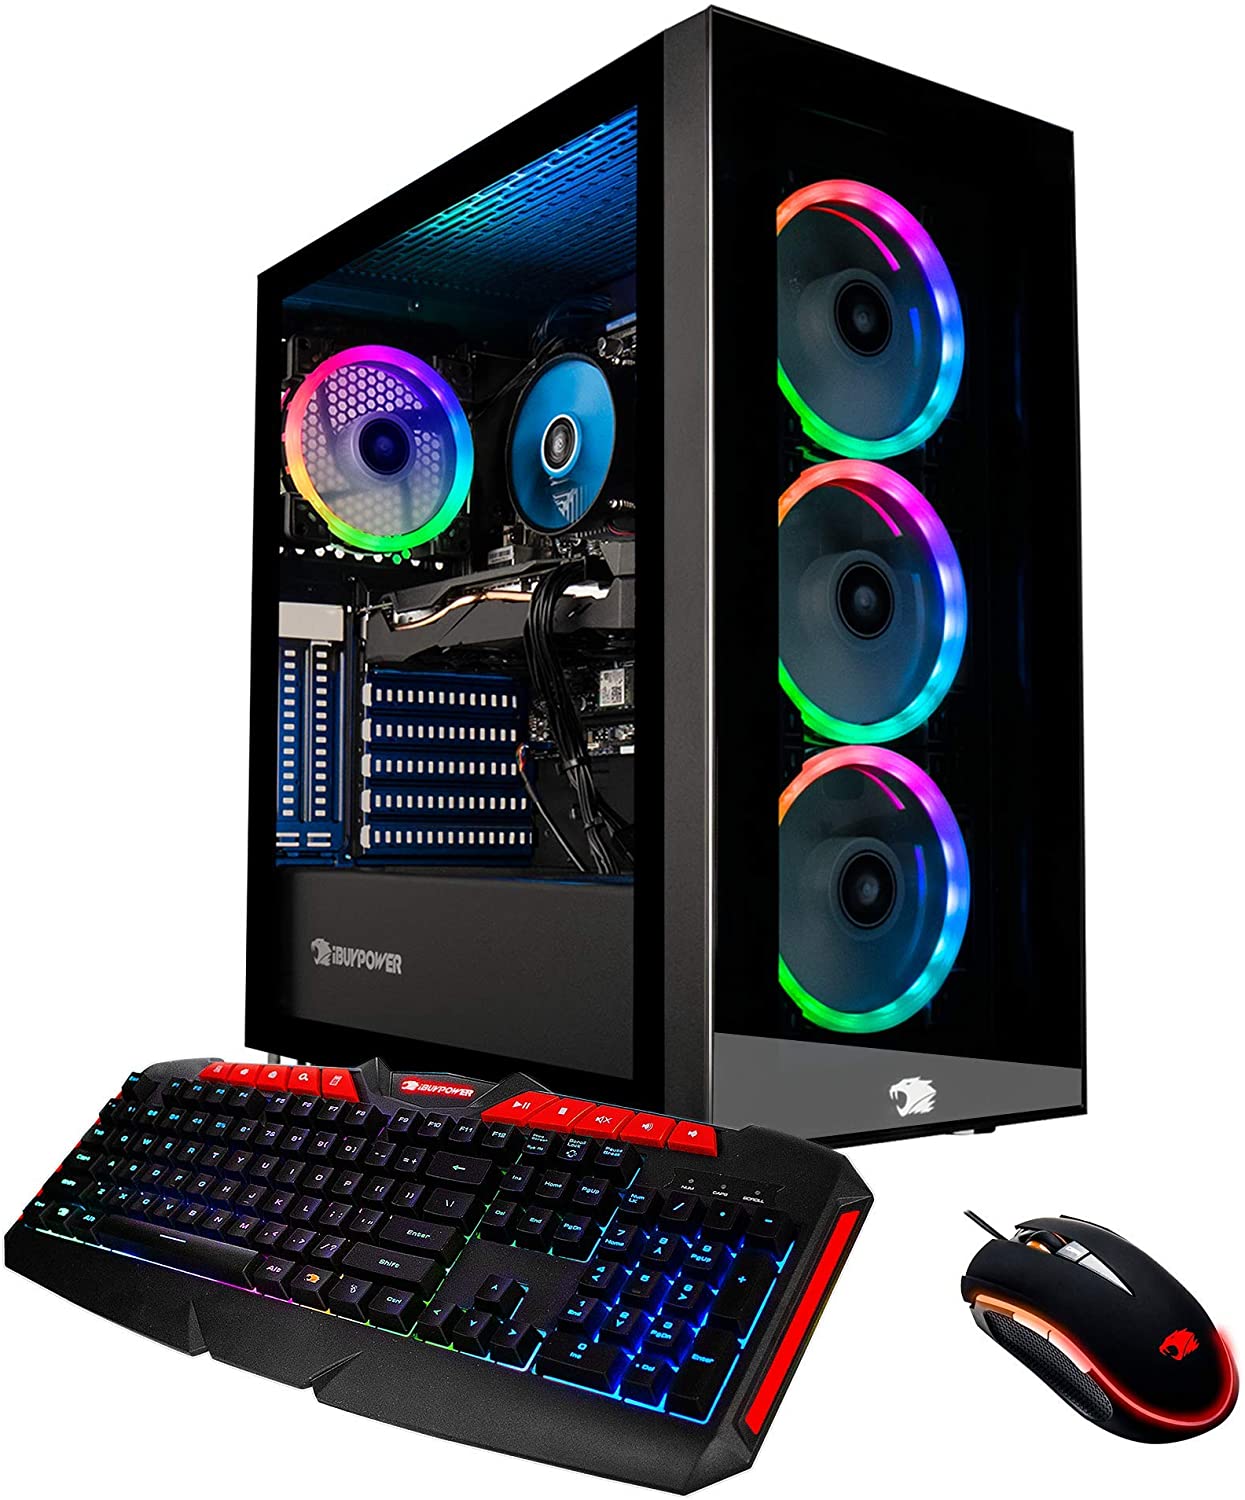 iBUYPOWER Gaming PC Computer Desktop Element 9260 (Intel Core i7-9700F 3.0Ghz, NVIDIA GeForce GTX 1660 Ti 6GB, 16GB DDR4, 240GB SSD, 1TB HDD, WiFi & Windows 10 Home) Black